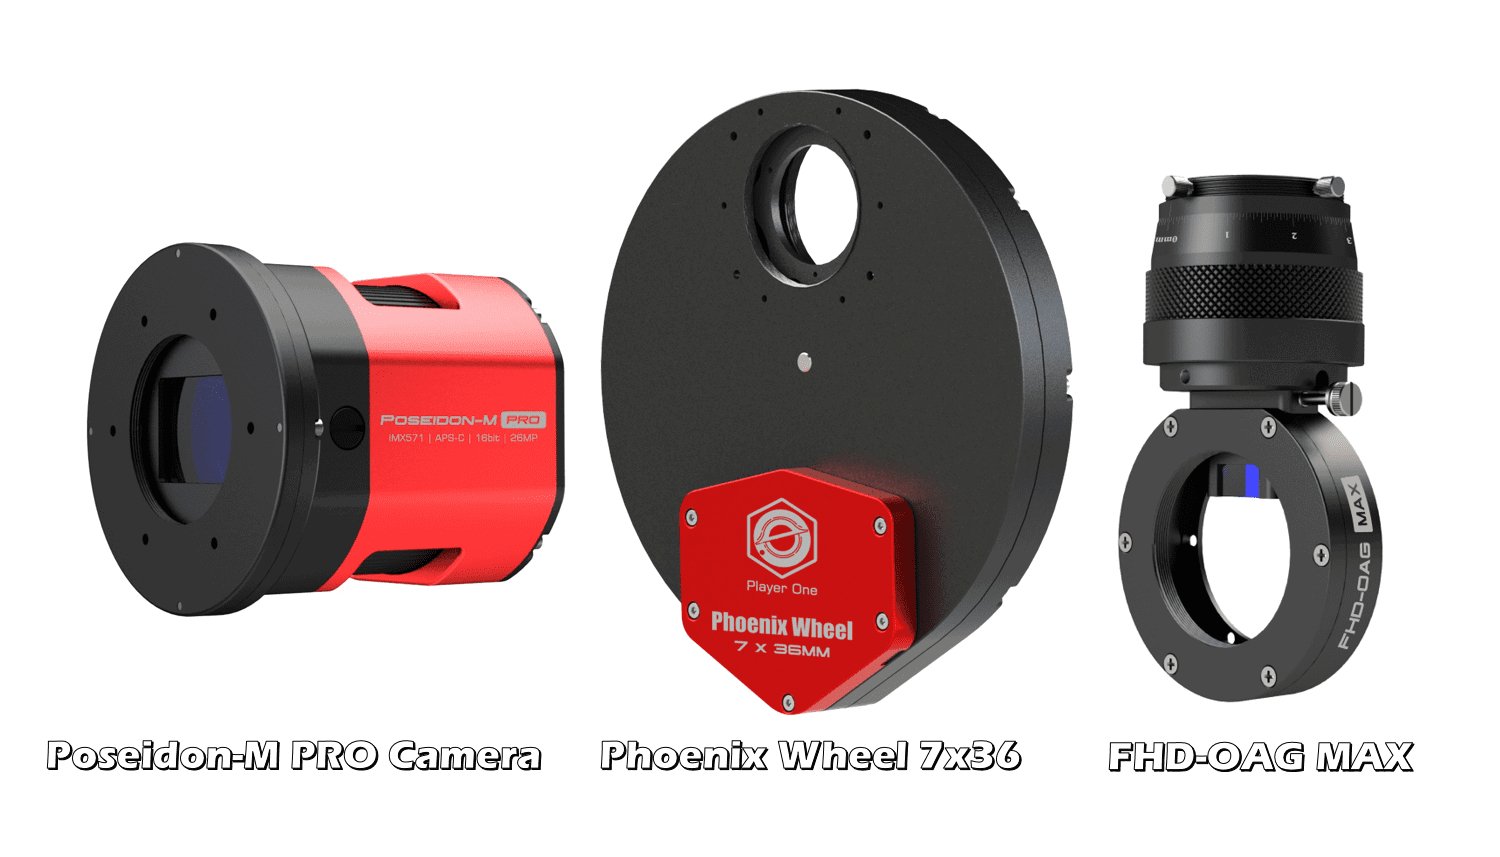 Player One Poseidon-M Pro (IMX571) Cooled Camera Camera + Phoenix Wheel 7x36 + FHD-OAG MAX